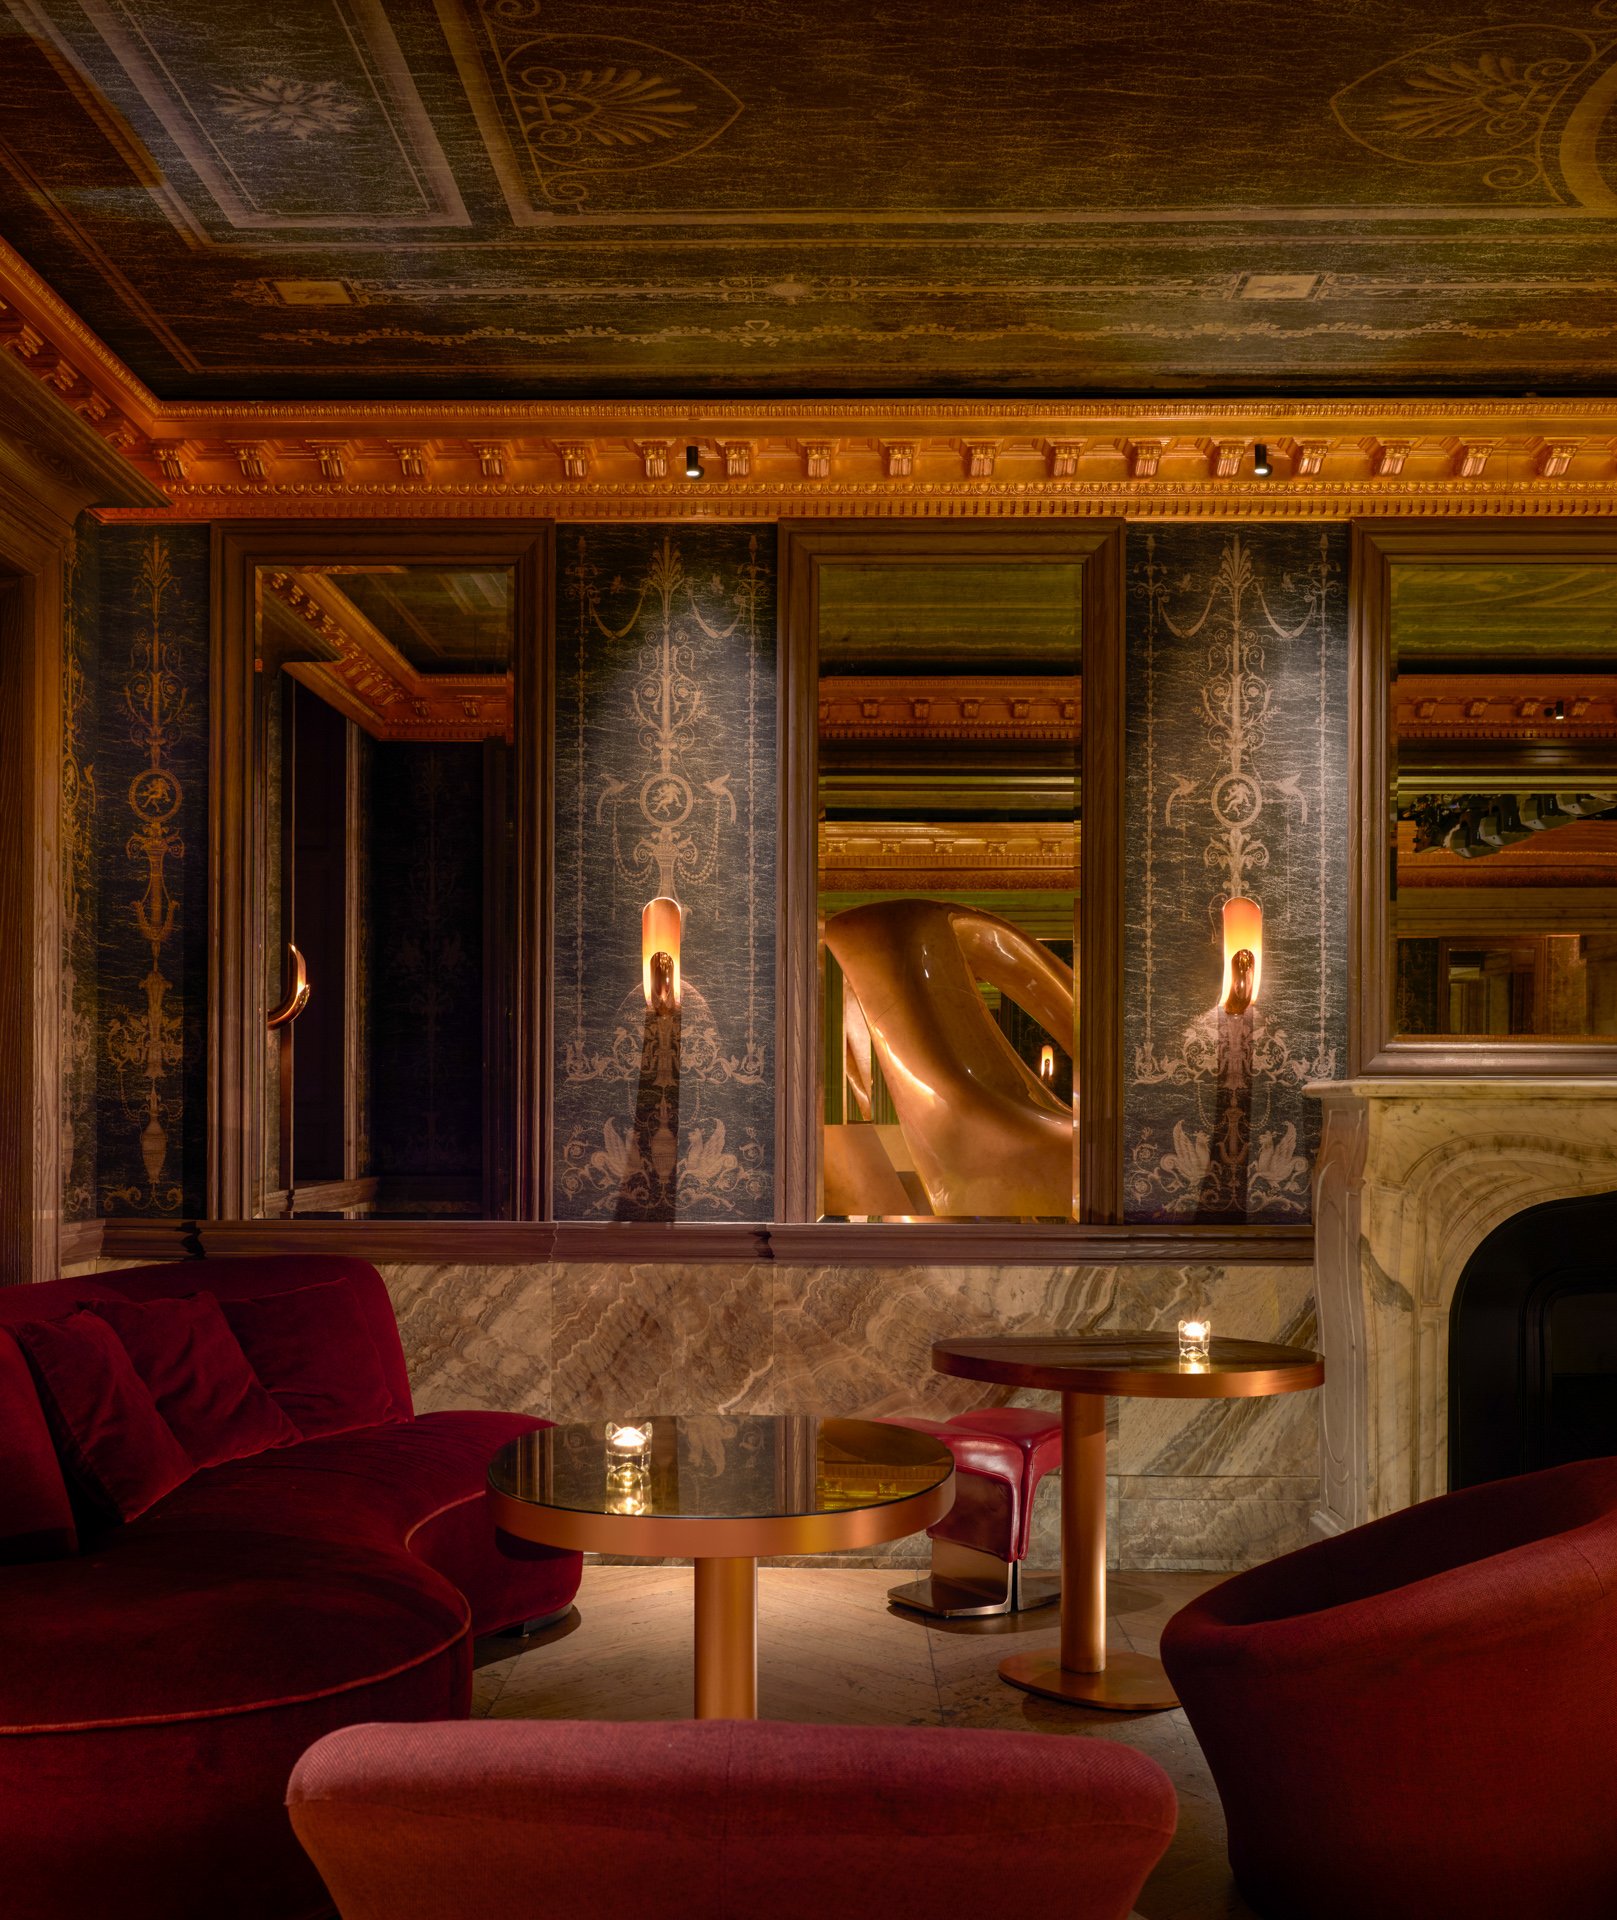 Secret Room Club, Dubai - Nightclub Interior Design on Love That